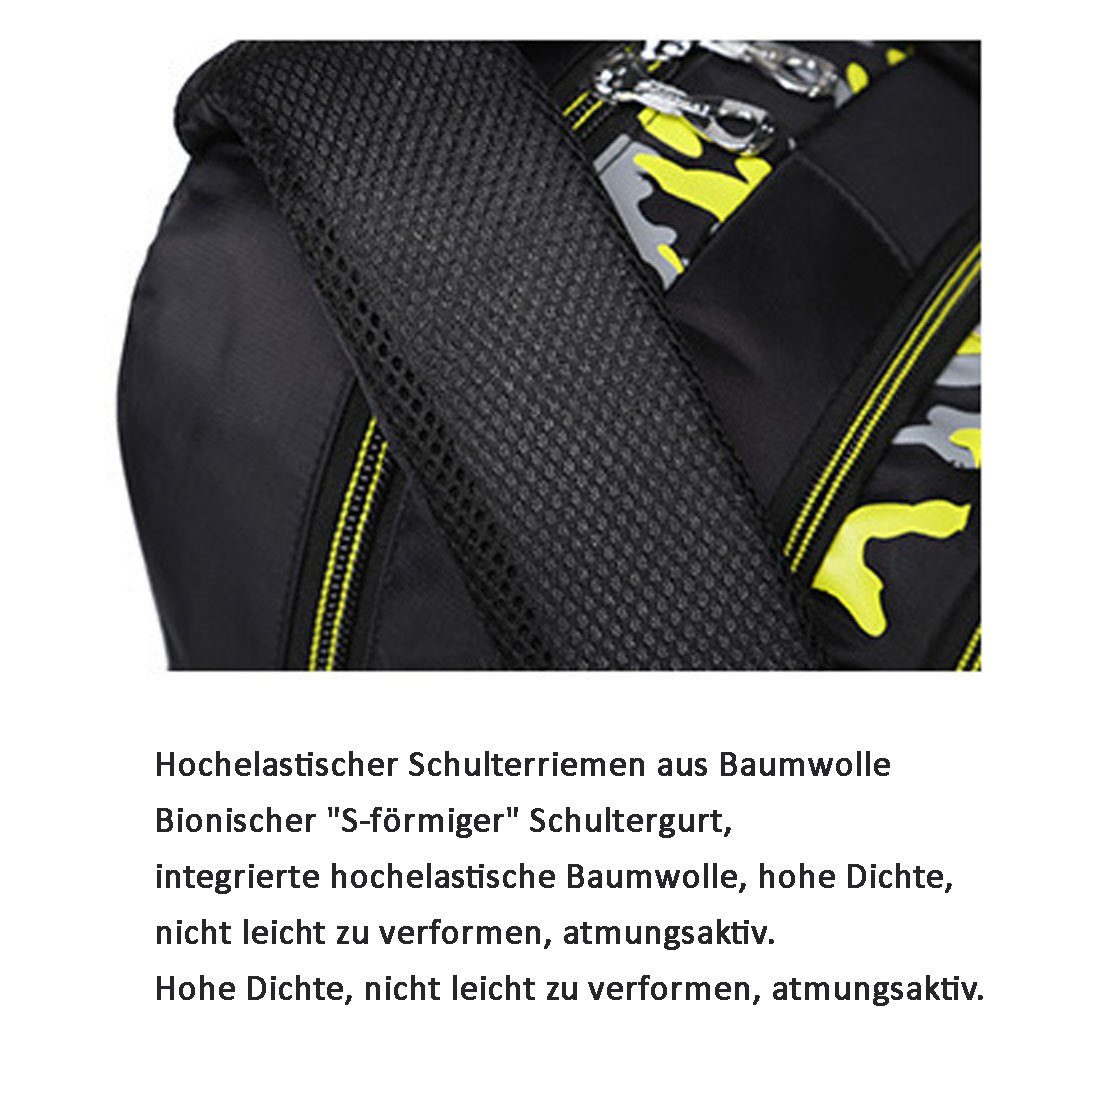 Schulranzen Set, Student DÖRÖY 3 Stück Gelb Camouflage Schulrucksack Kinder gedruckt Backpack